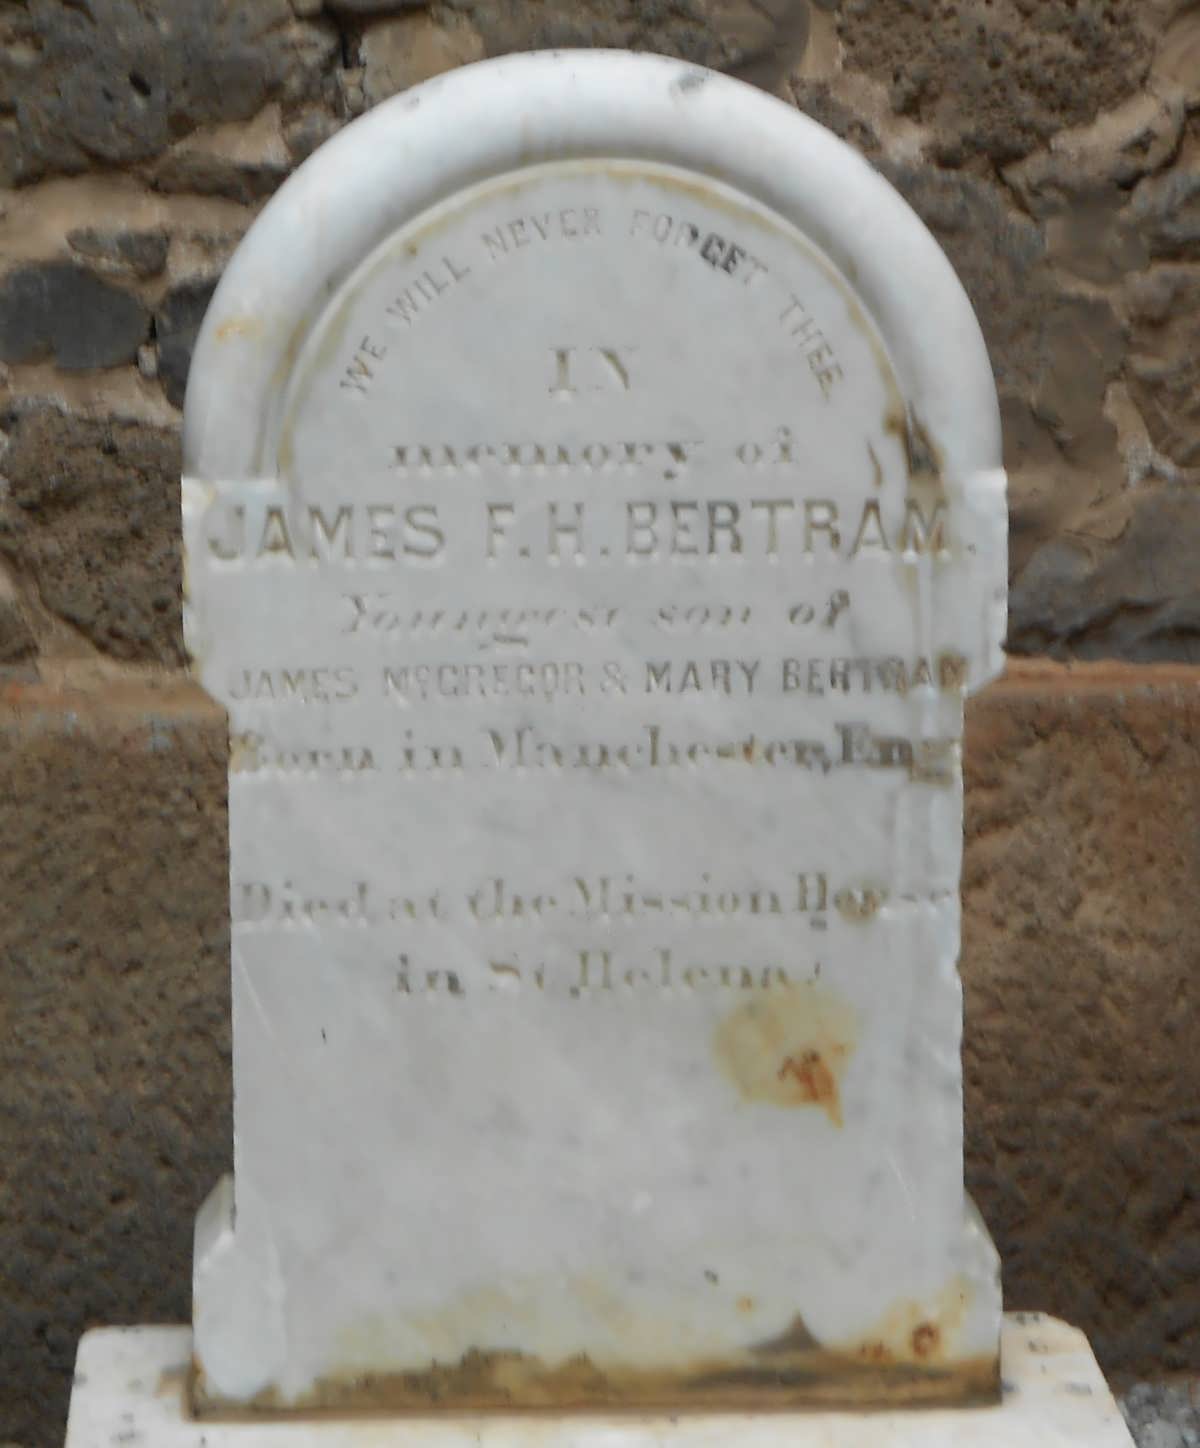 BERTRAM James F.H. 